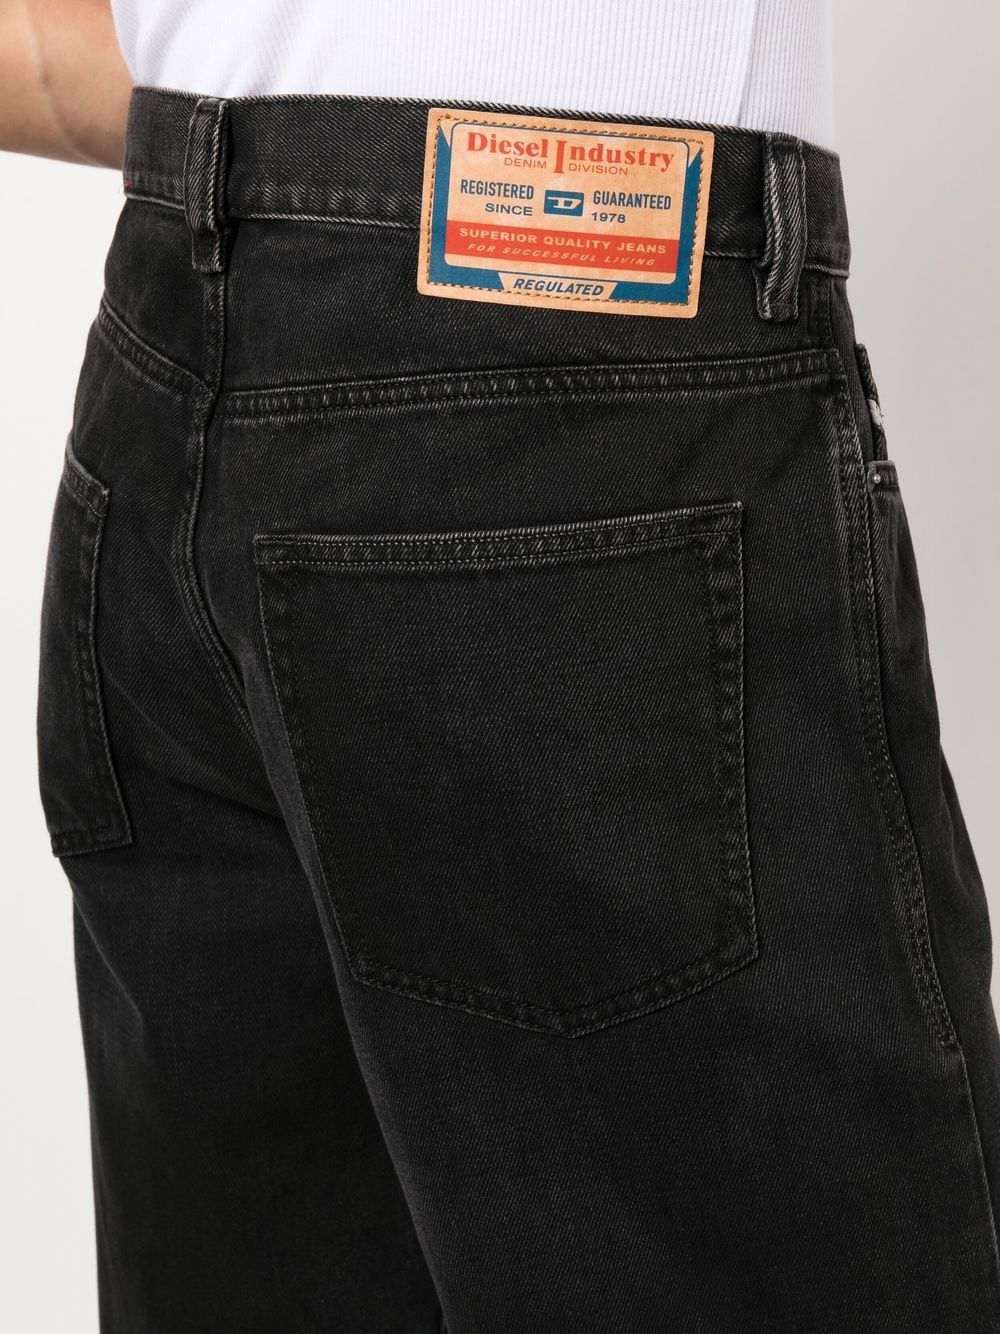 2010 straight-leg jeans - 5